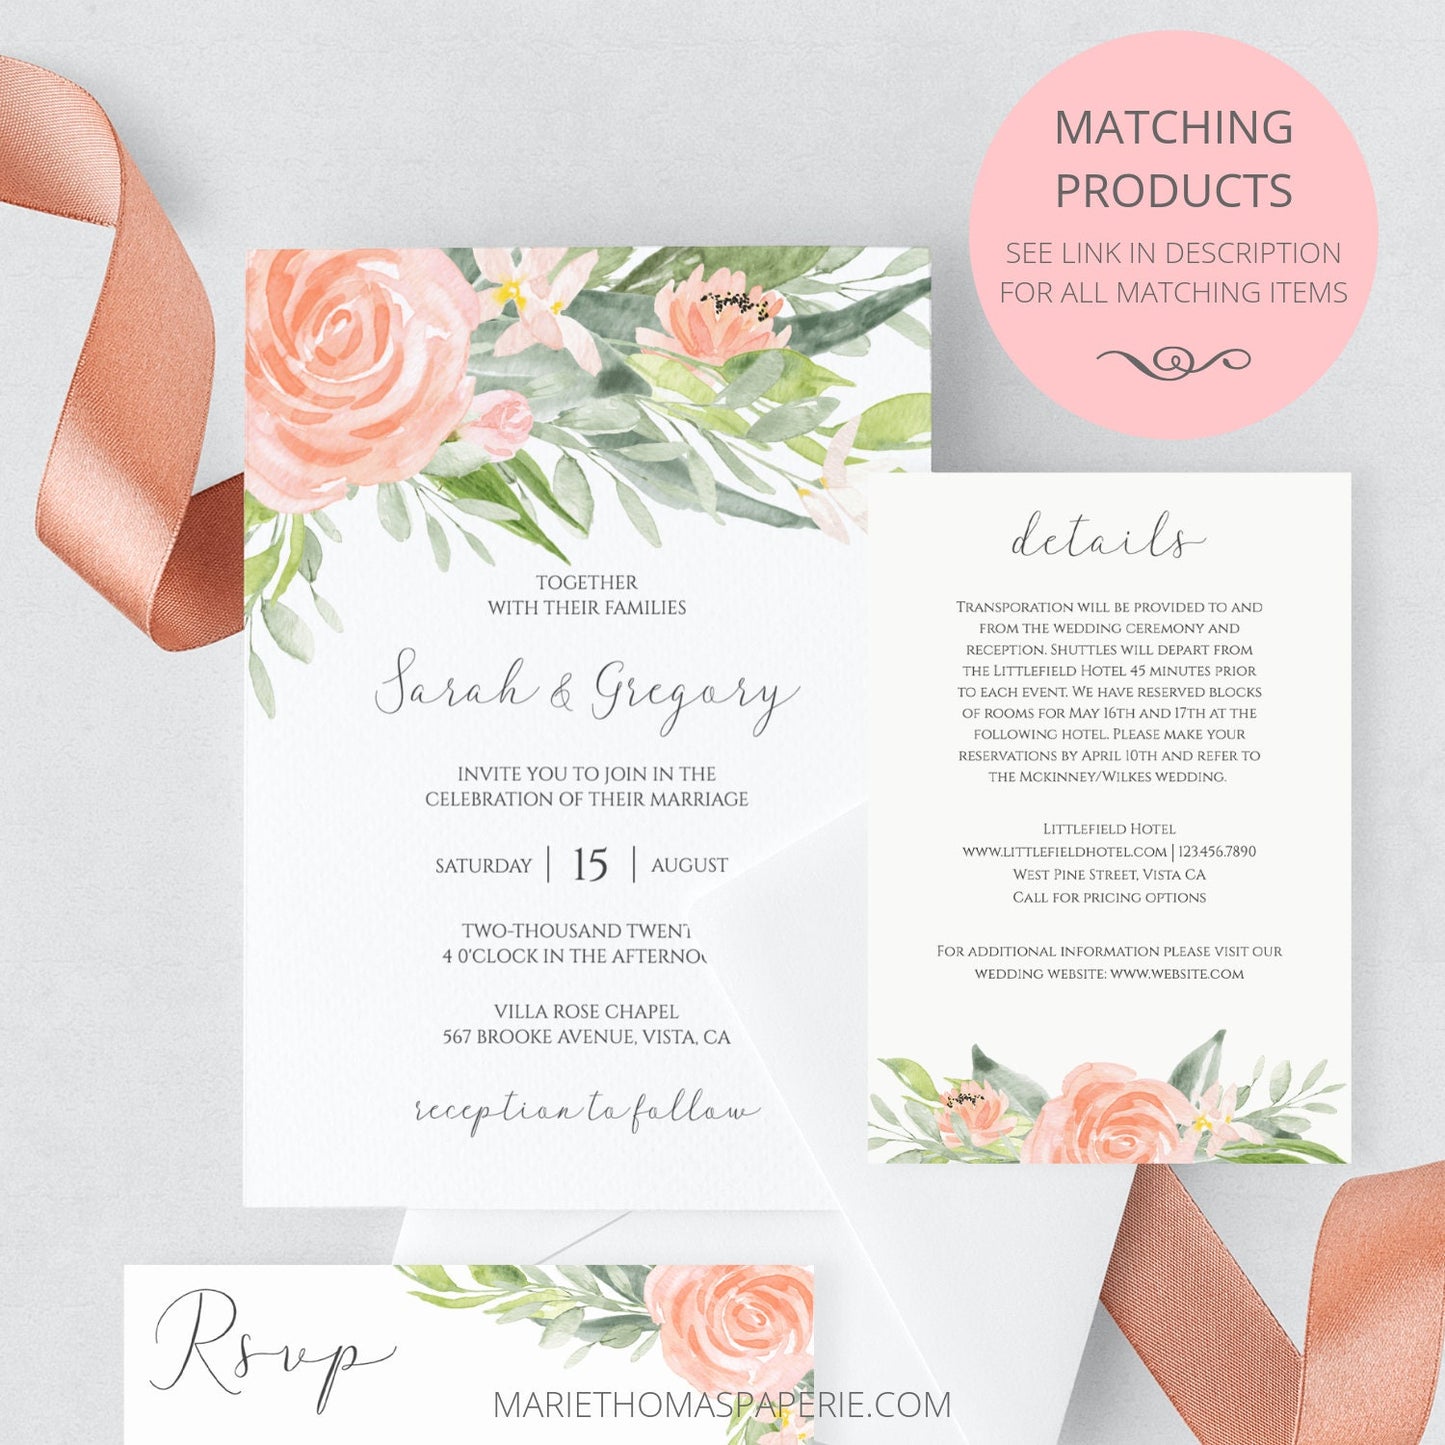 Editable Bridal Shower Invitation Boho Peach Floral Bridal Shower Invite Template